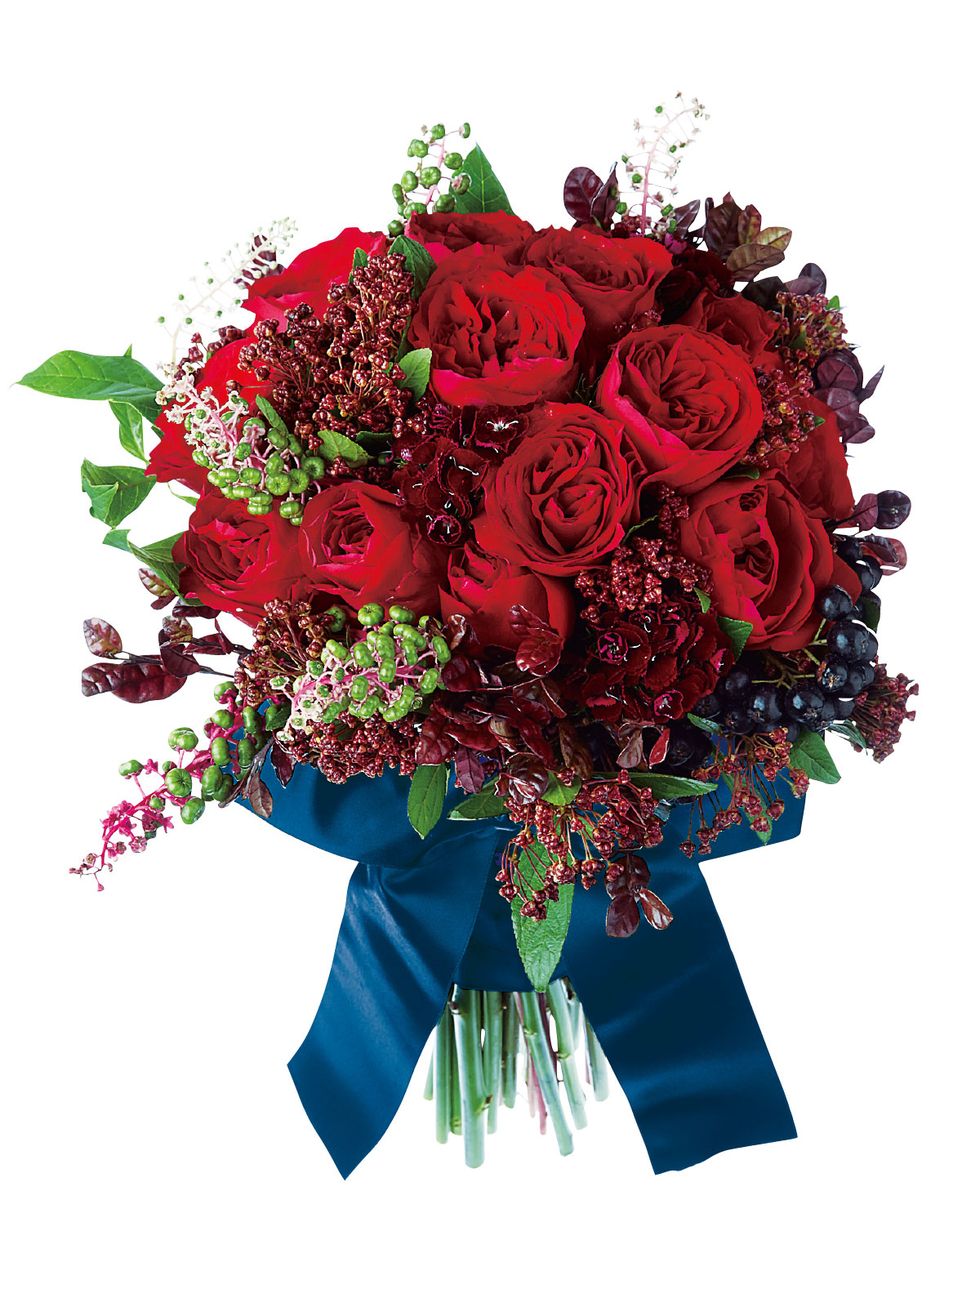 Petal, Bouquet, Flower, Red, Cut flowers, Floristry, Flower Arranging, Flowering plant, Floral design, Rose family, 